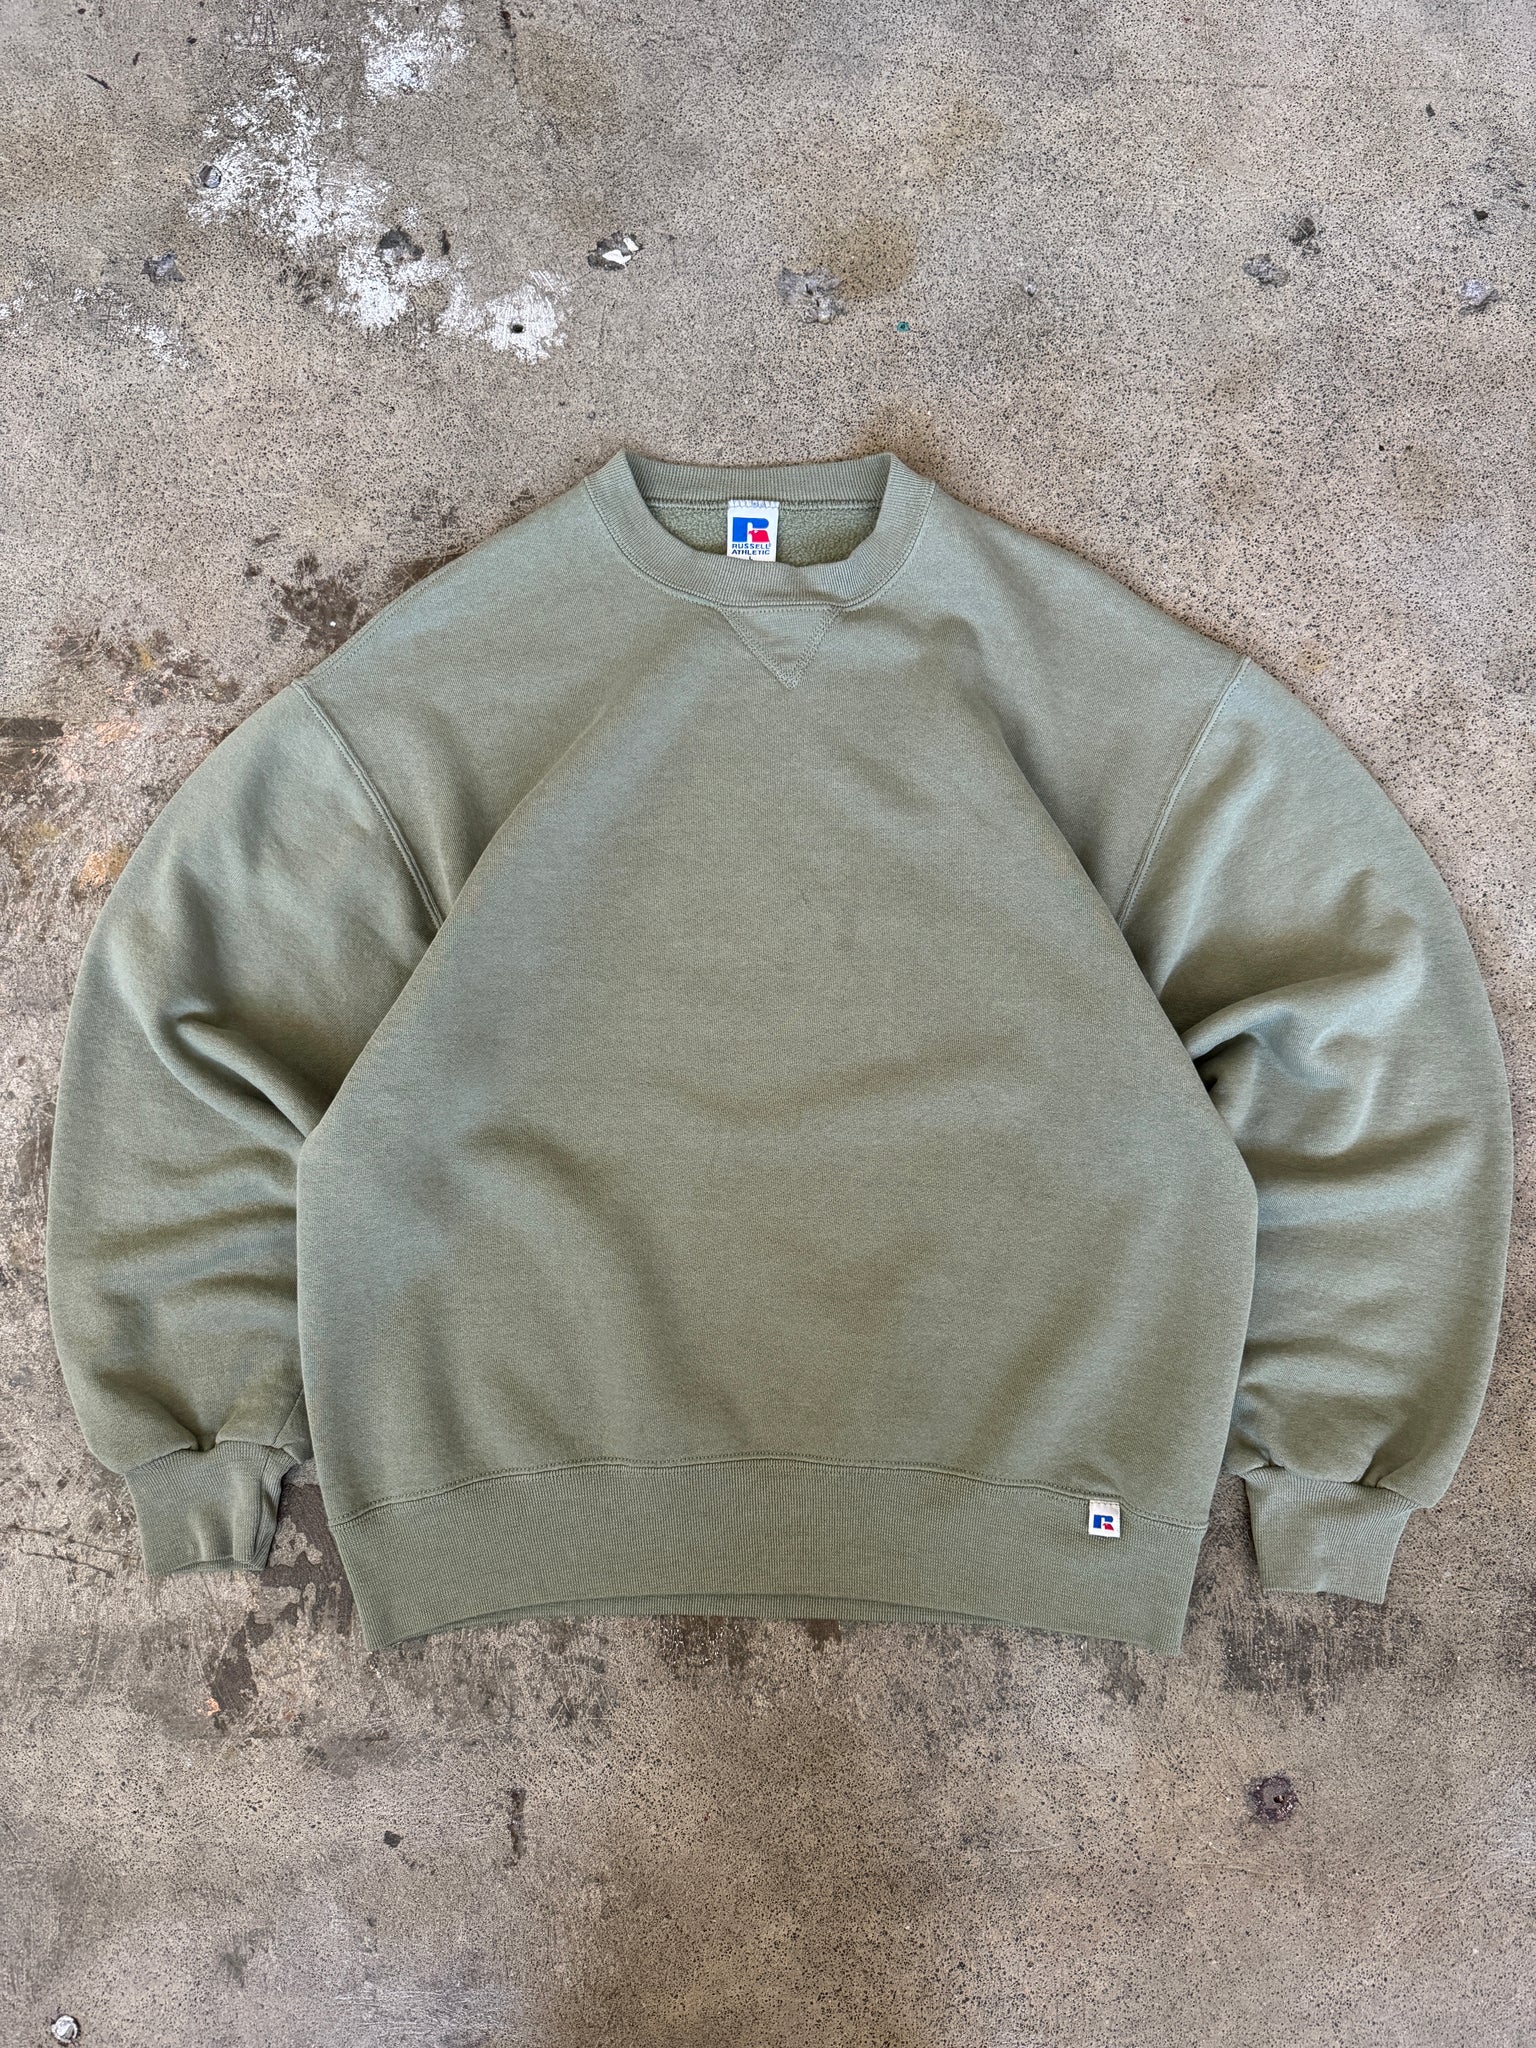 Vintage Faded Green Russell Athletics Blank Sweatshirt (M/L)